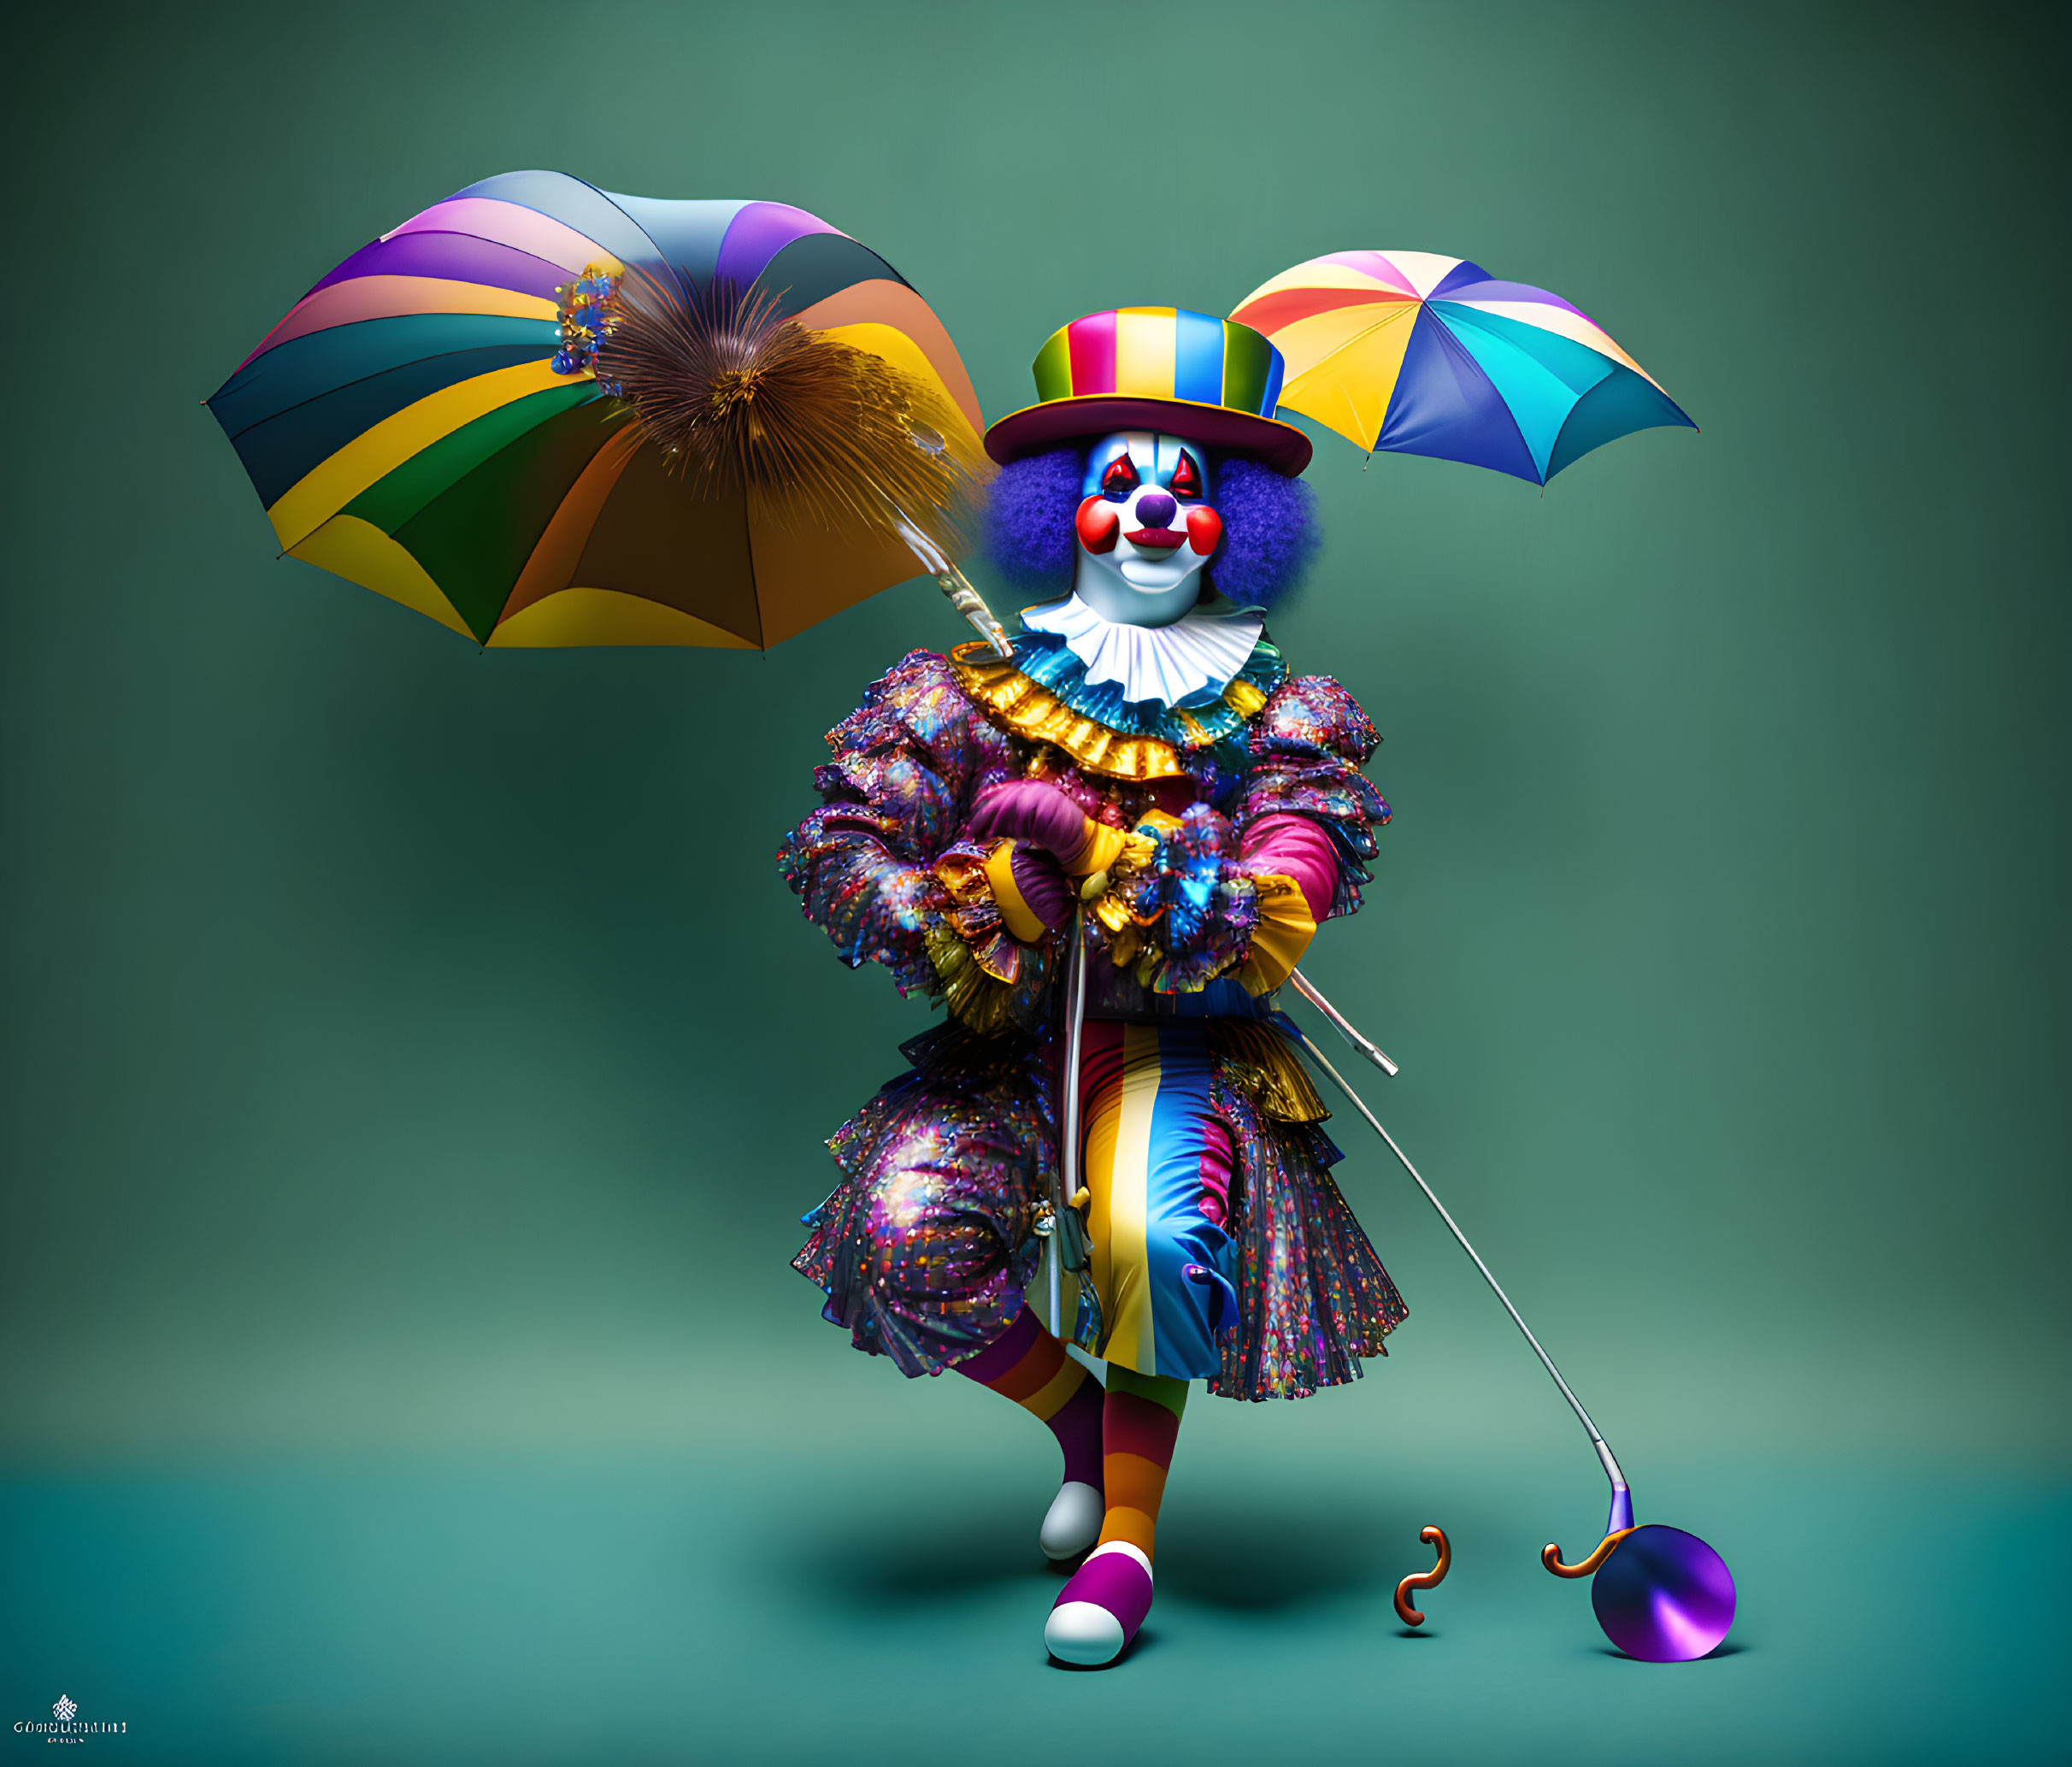 Whimsical Clown in Teal Rainstorm